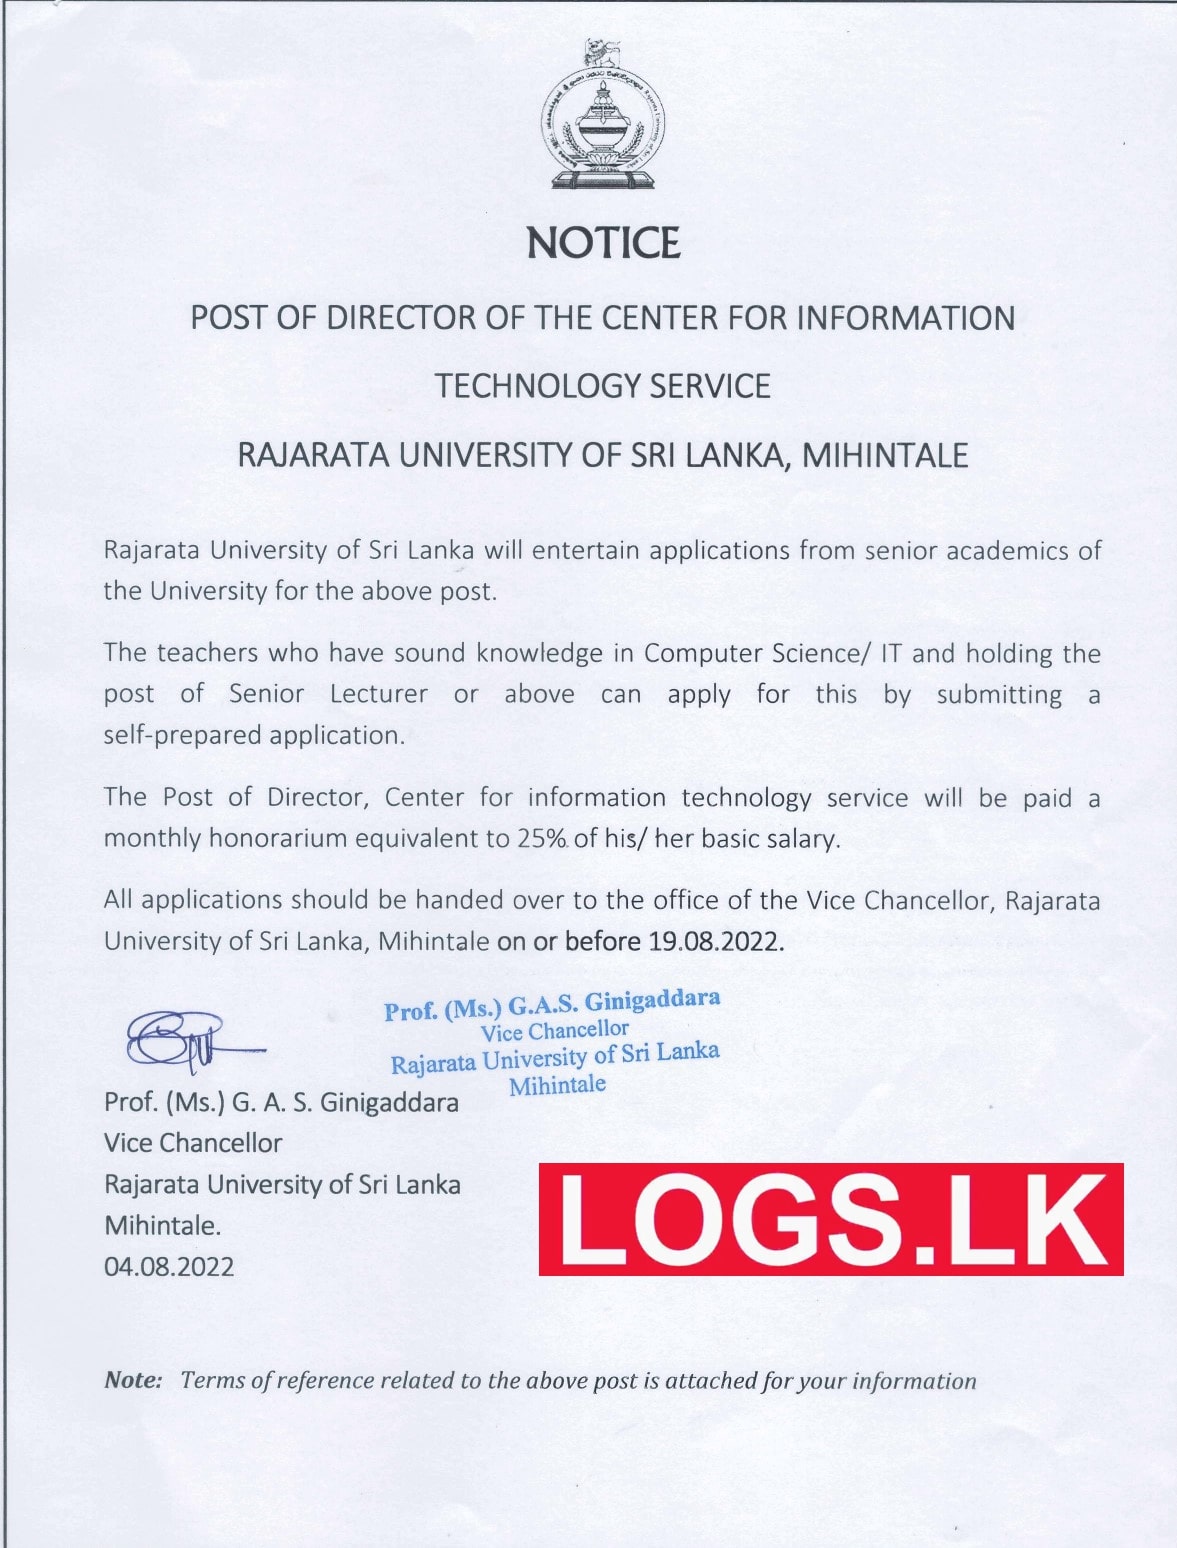 Director Jobs Vacancies 2022 - Rajarata University Jobs Vacancy Details, Application